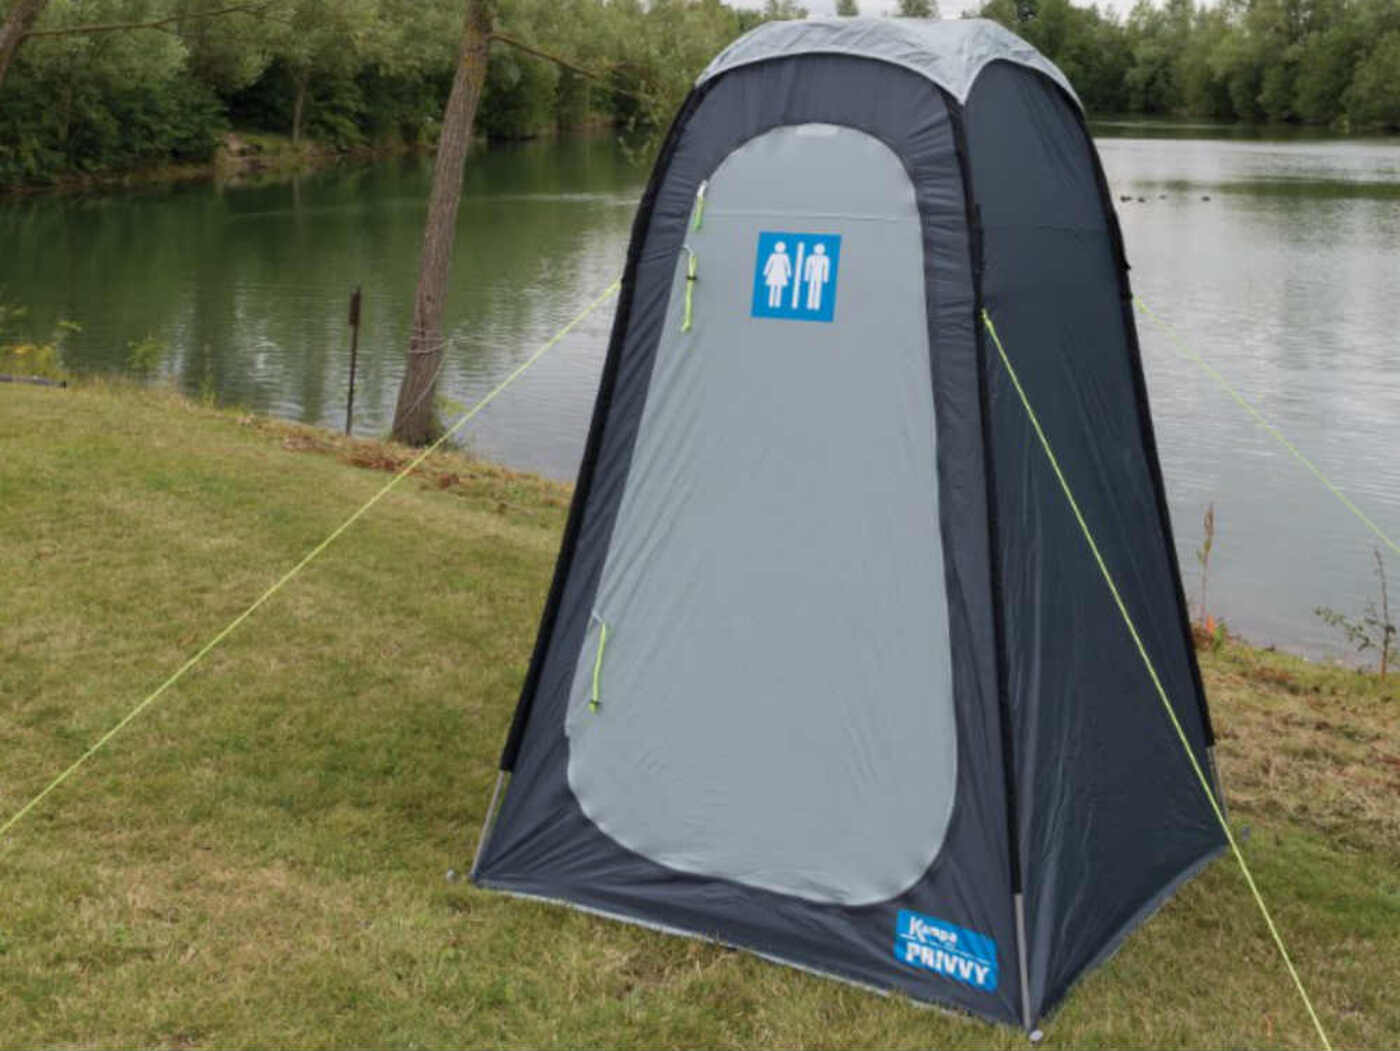 Kampa Kampa Privy Toilet Tent Camping Caravan Pop Up Loo 5060145396128 